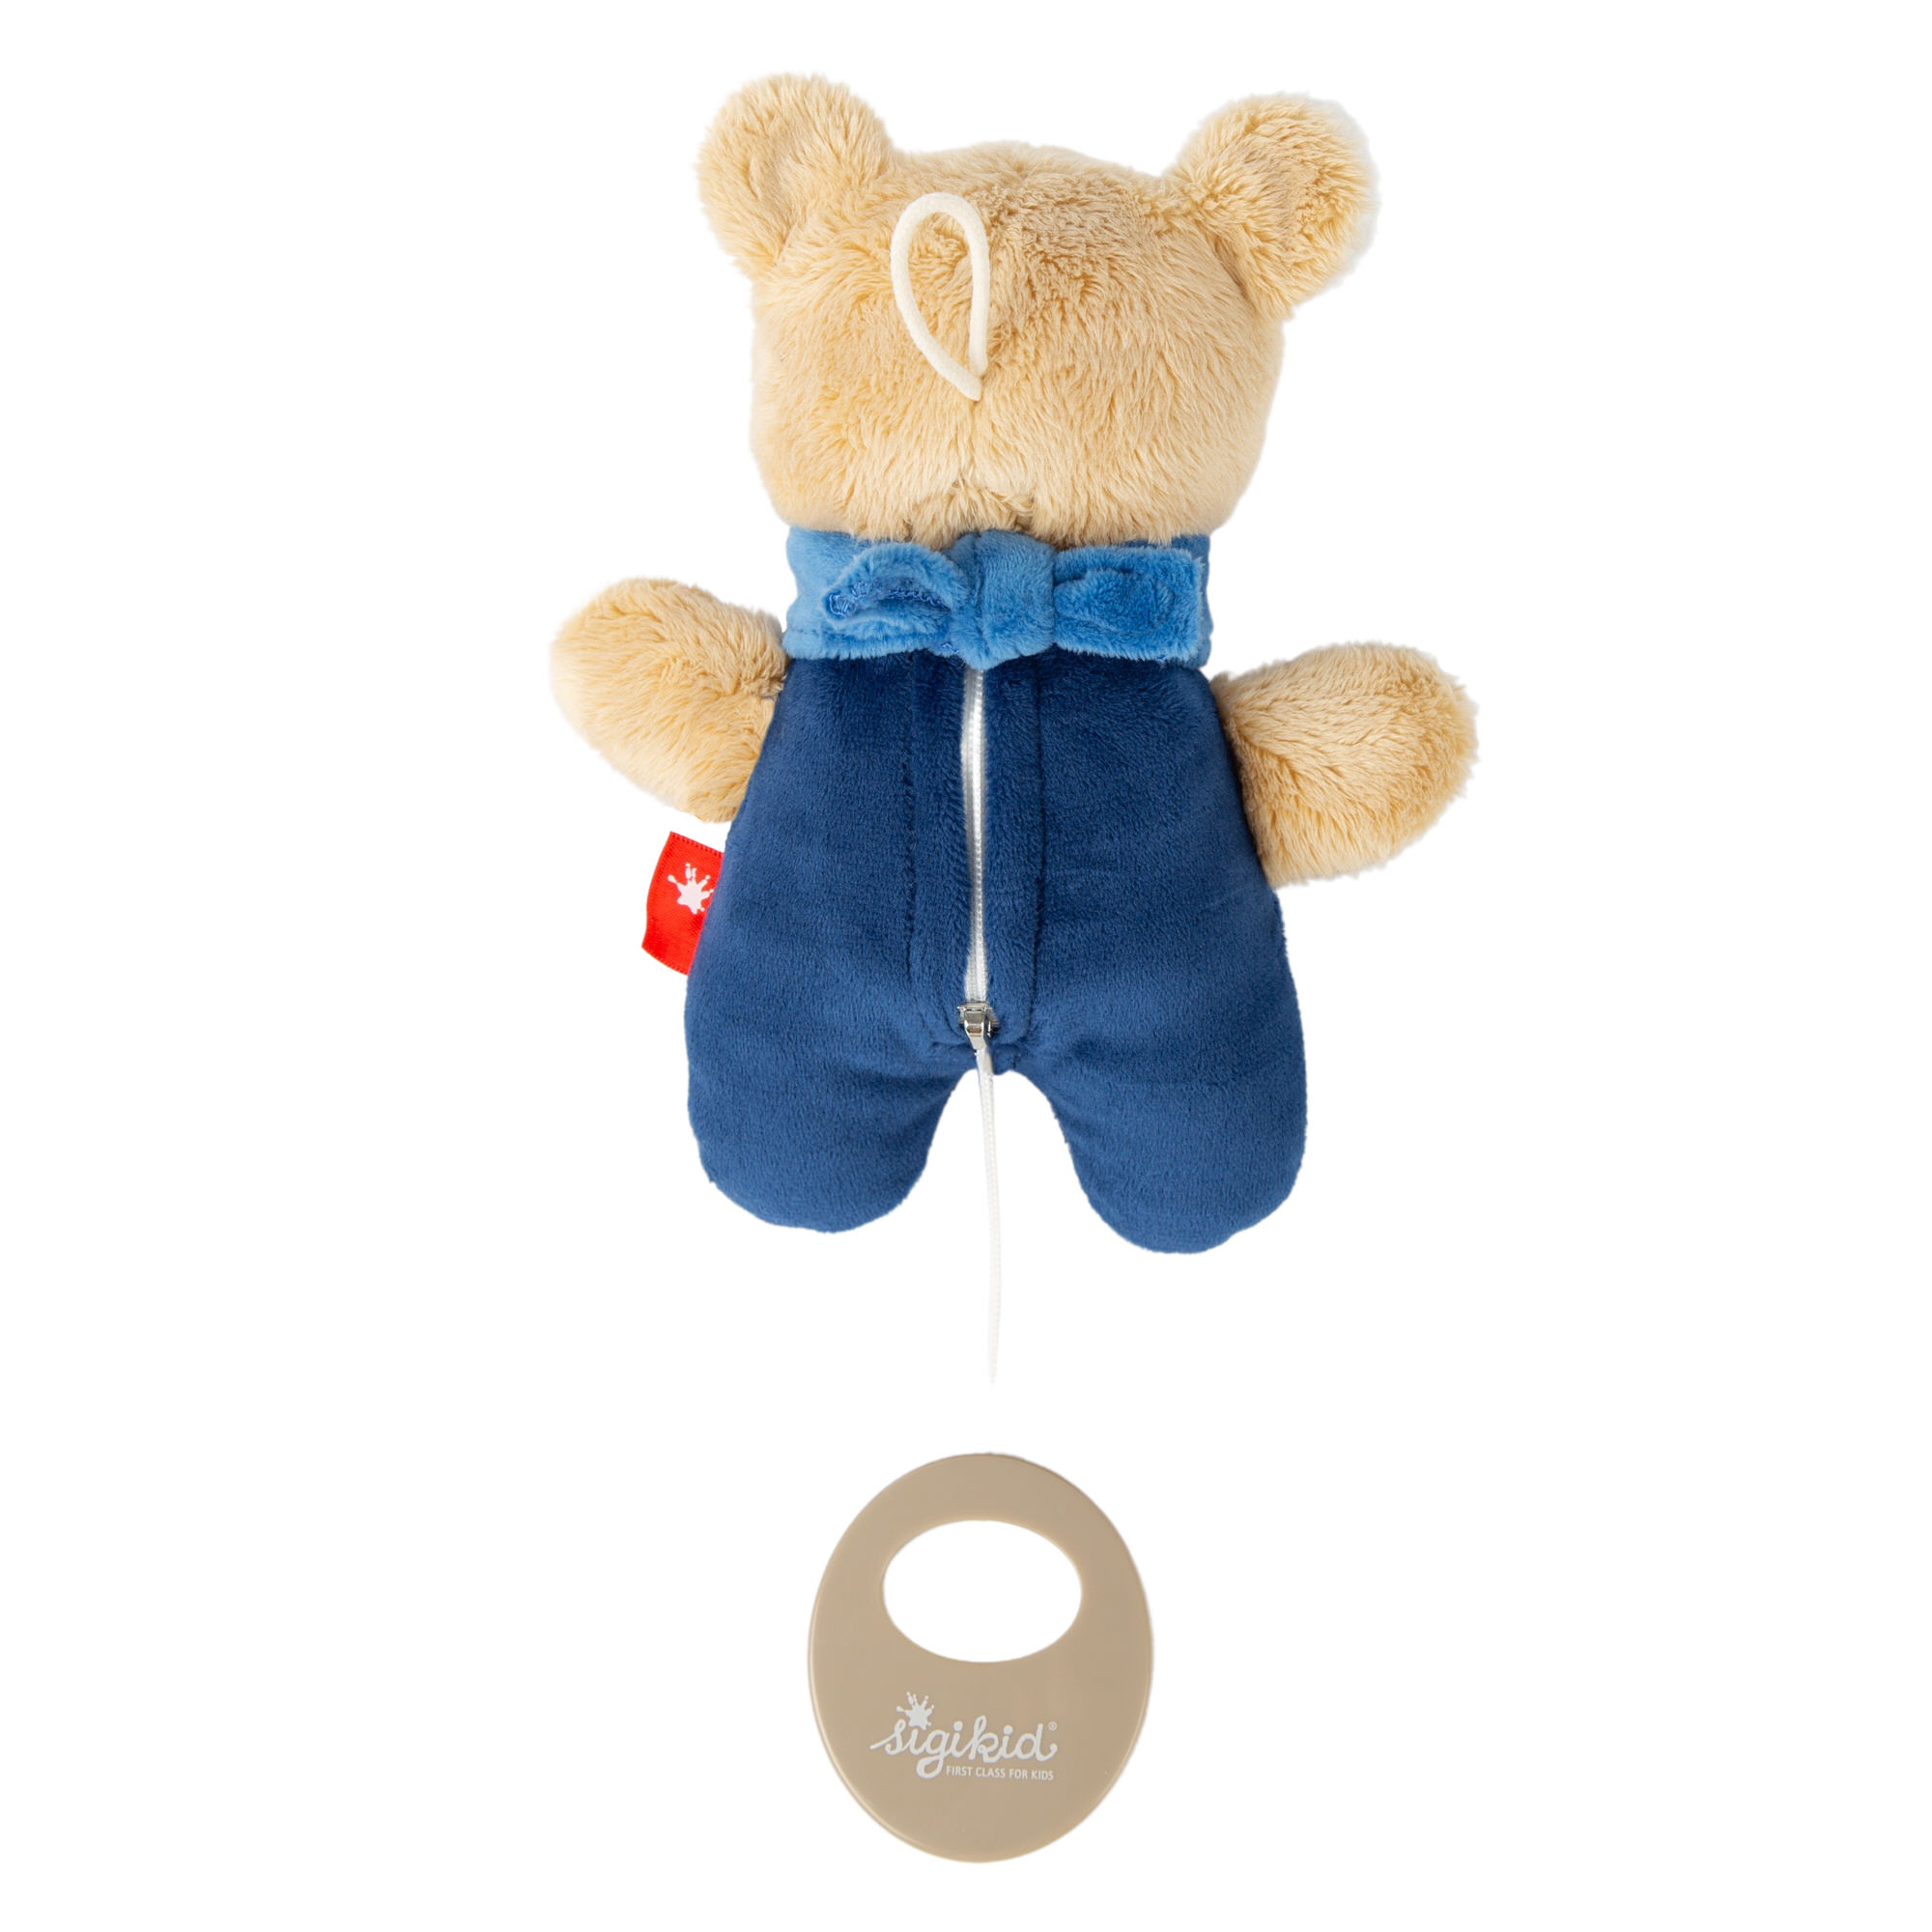 Musical mini baby plush toy bear